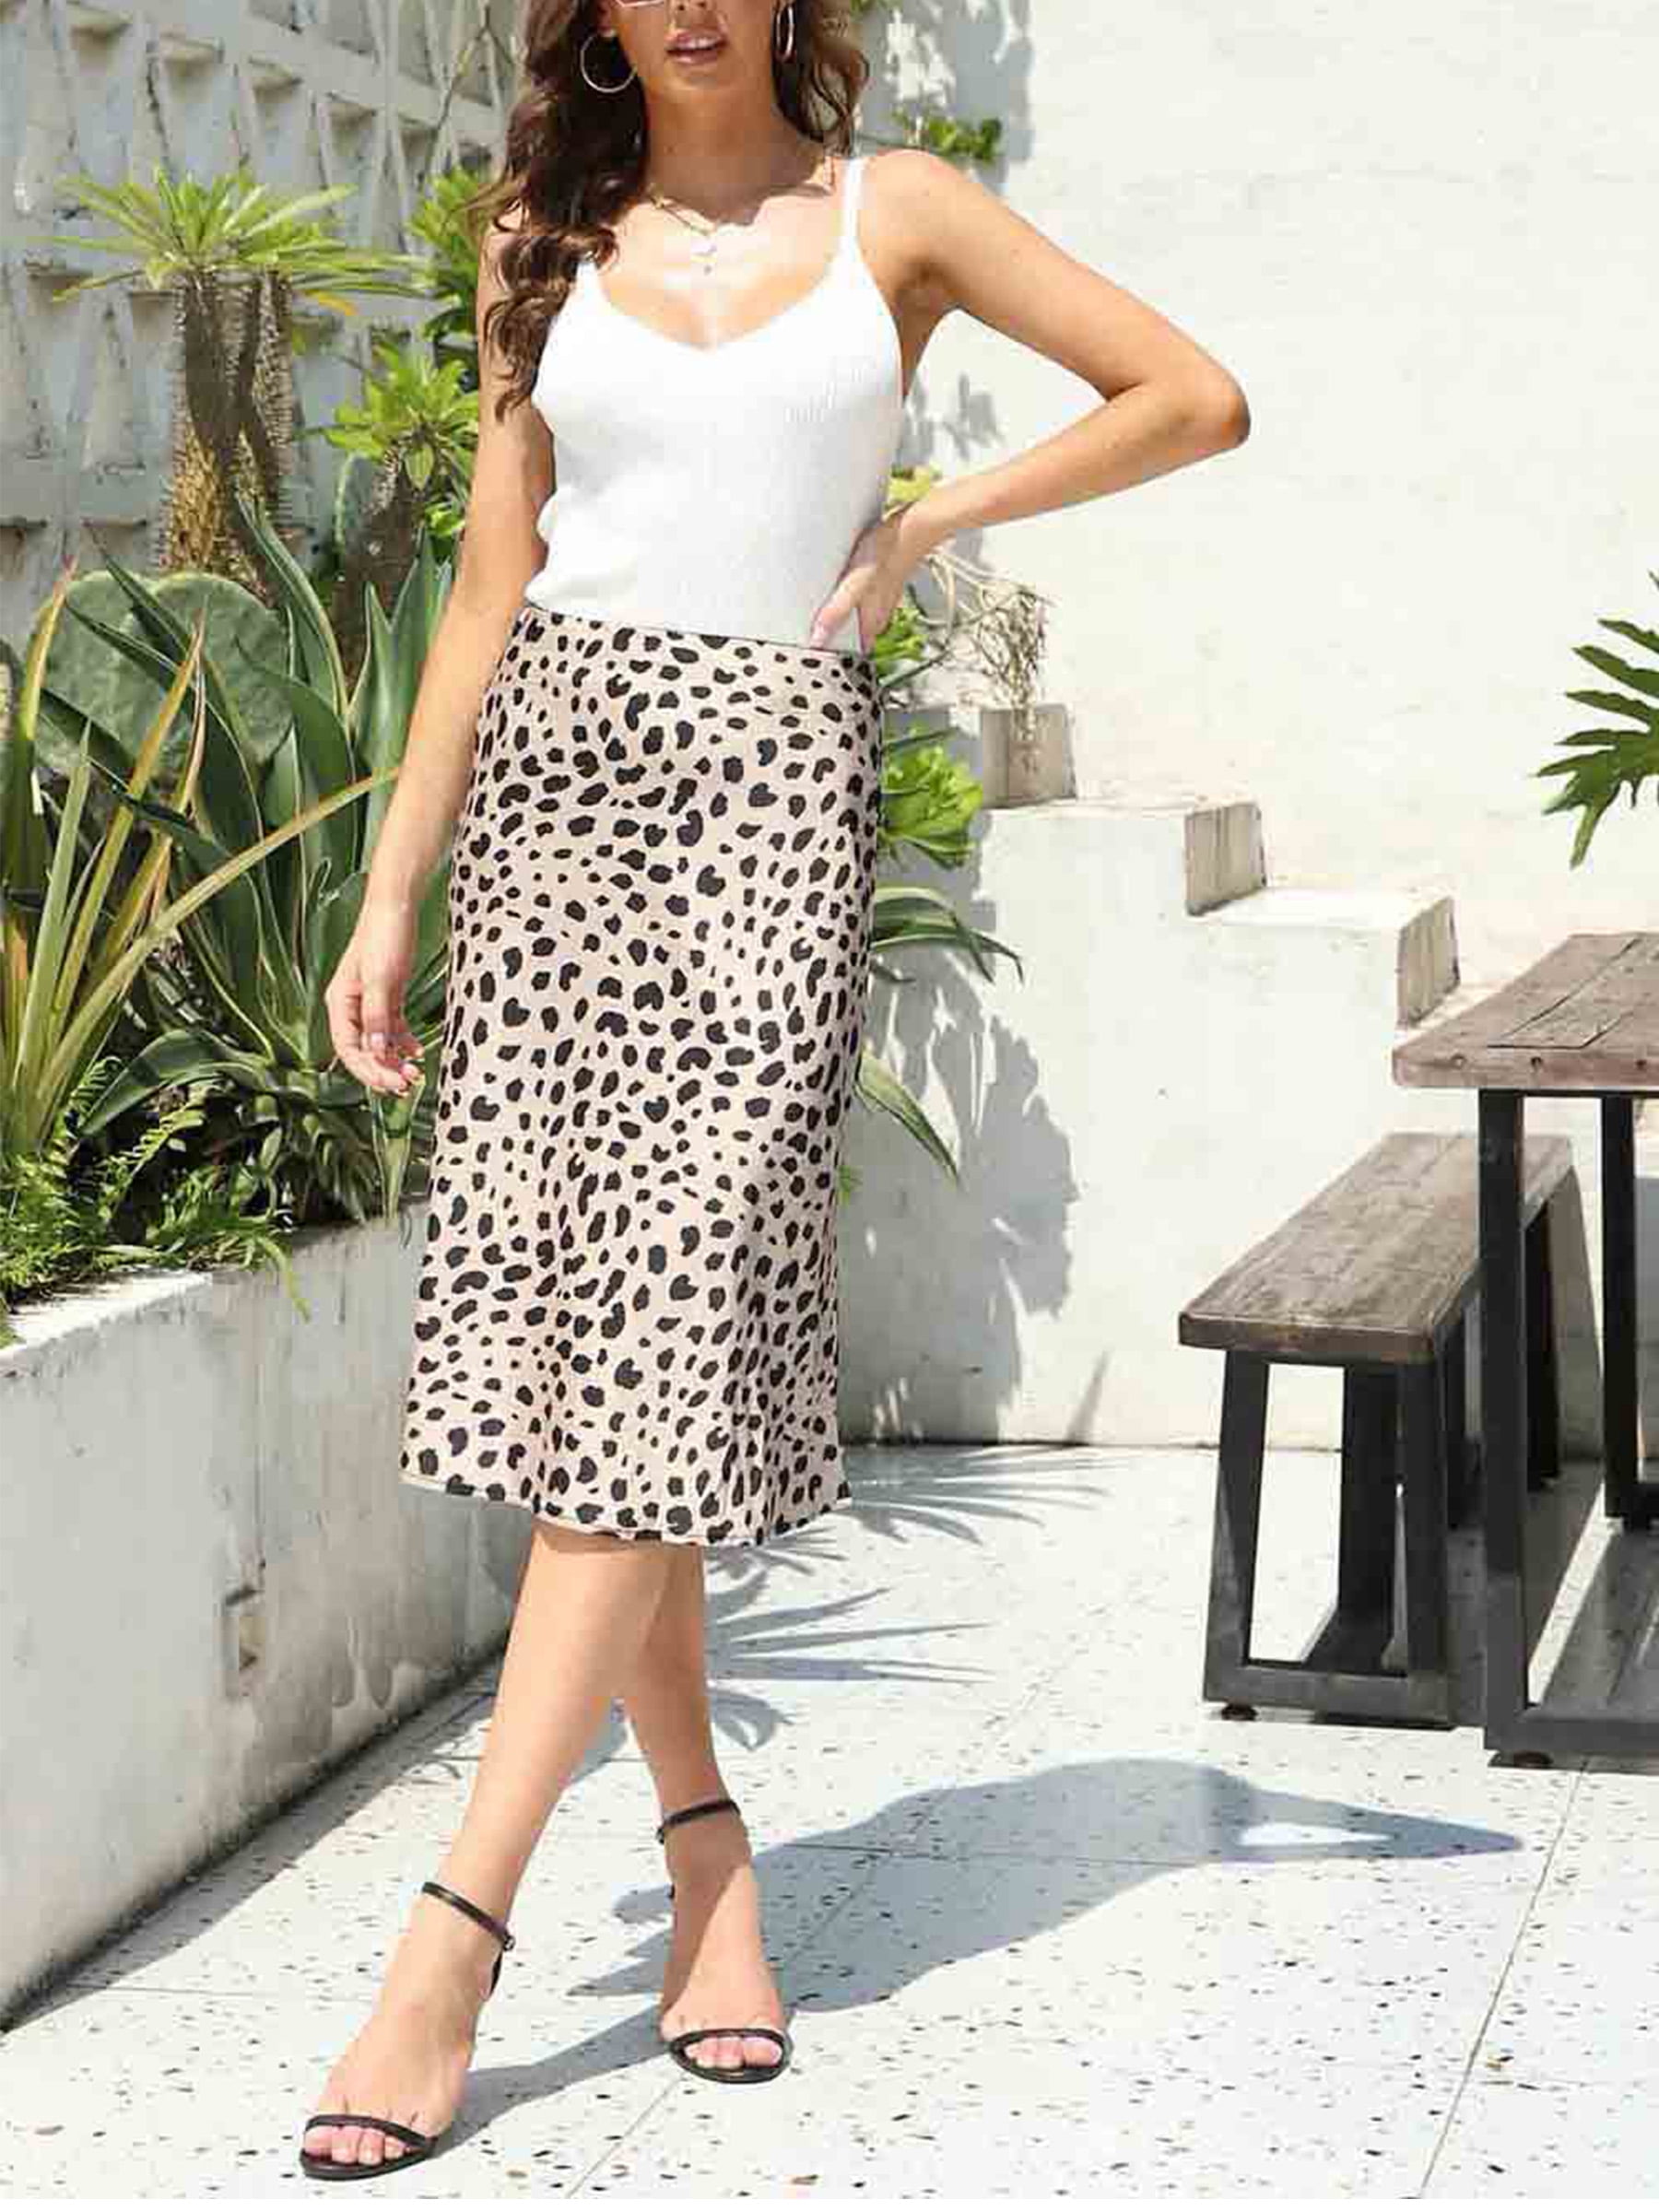 Keasmto Leopard Print Skirt for Women Midi Length Cheetah High Waist Silk  Satin Summer Skirts XS 